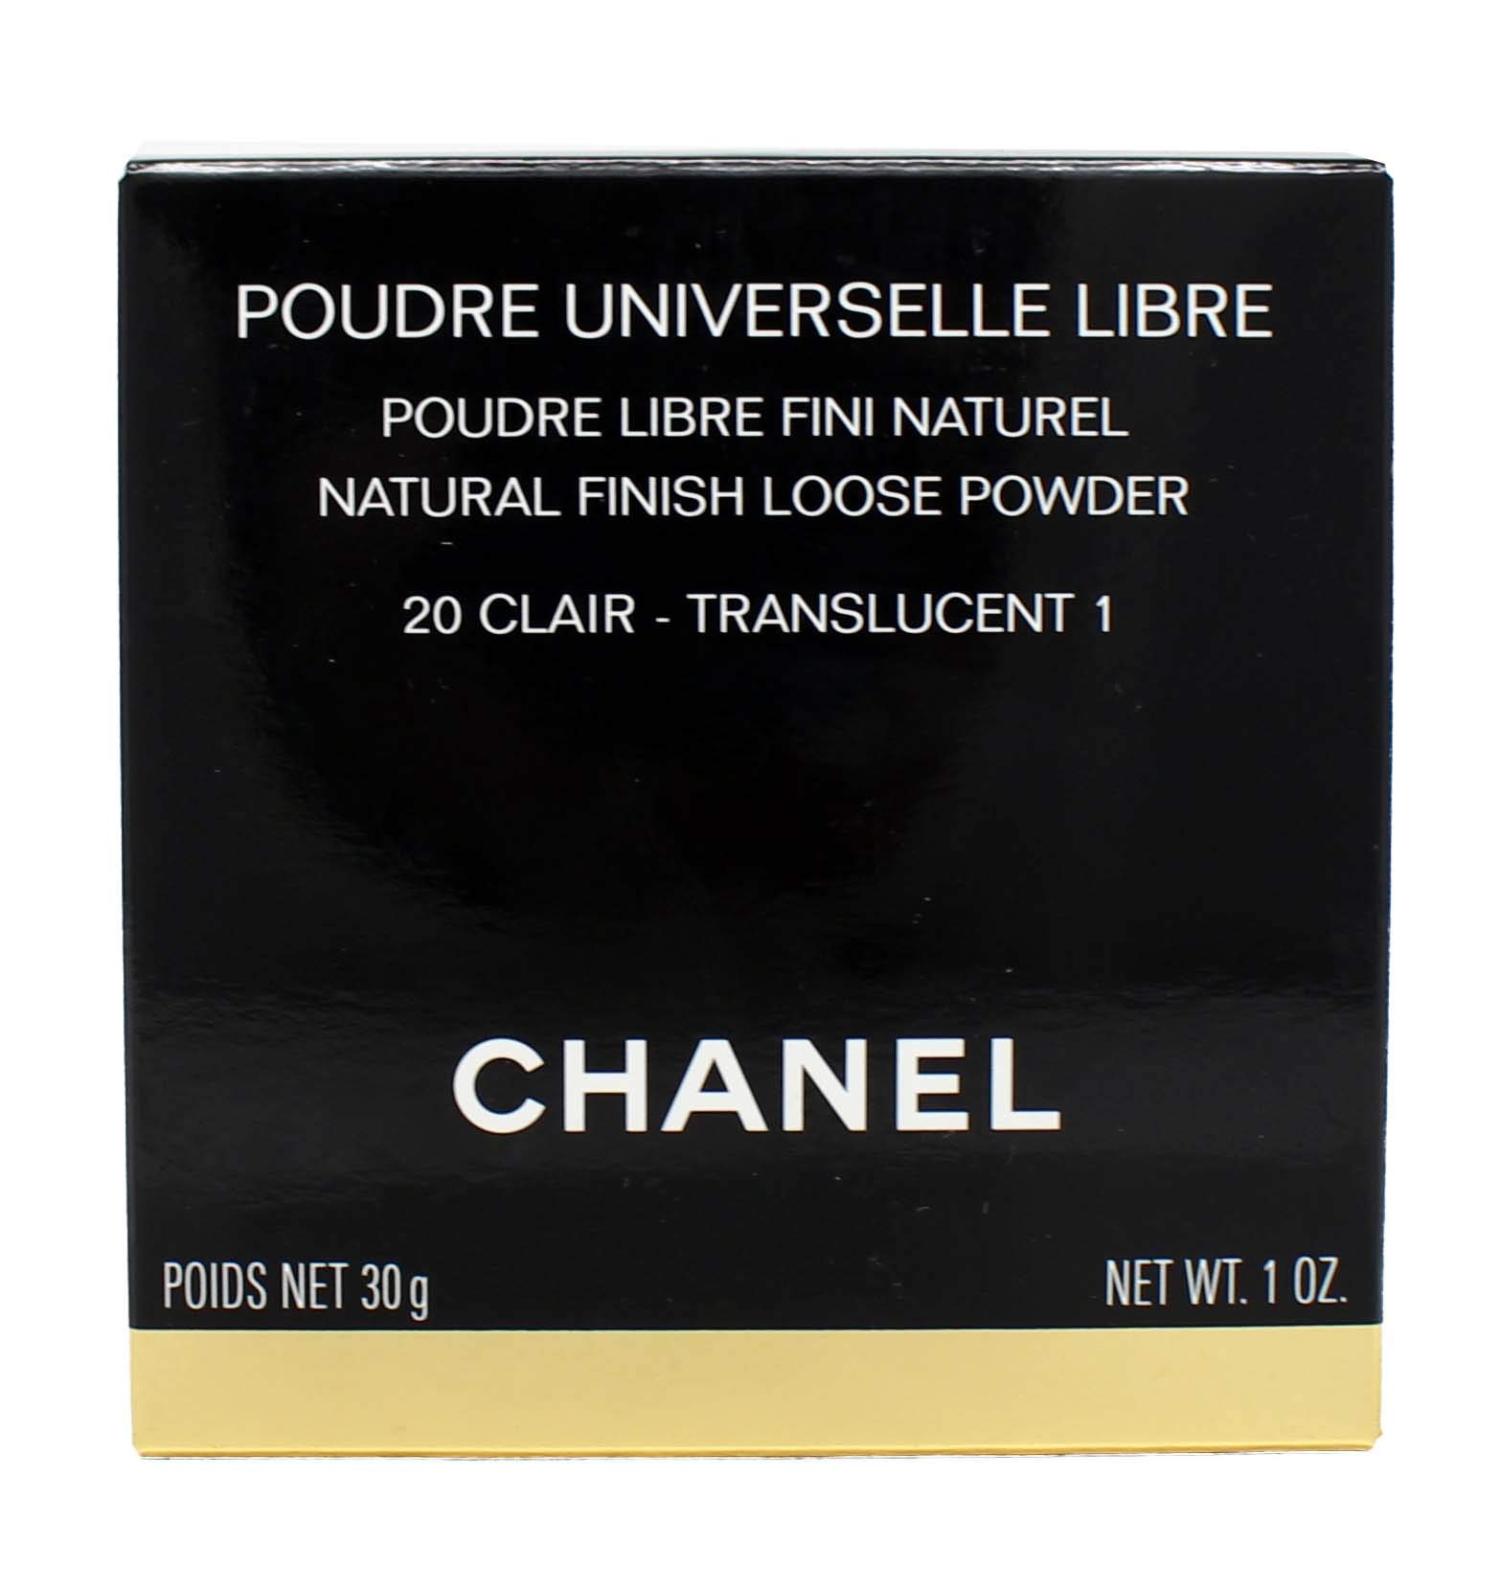 CHANEL Poudre Universelle Libre Natural Finish Loose Powder